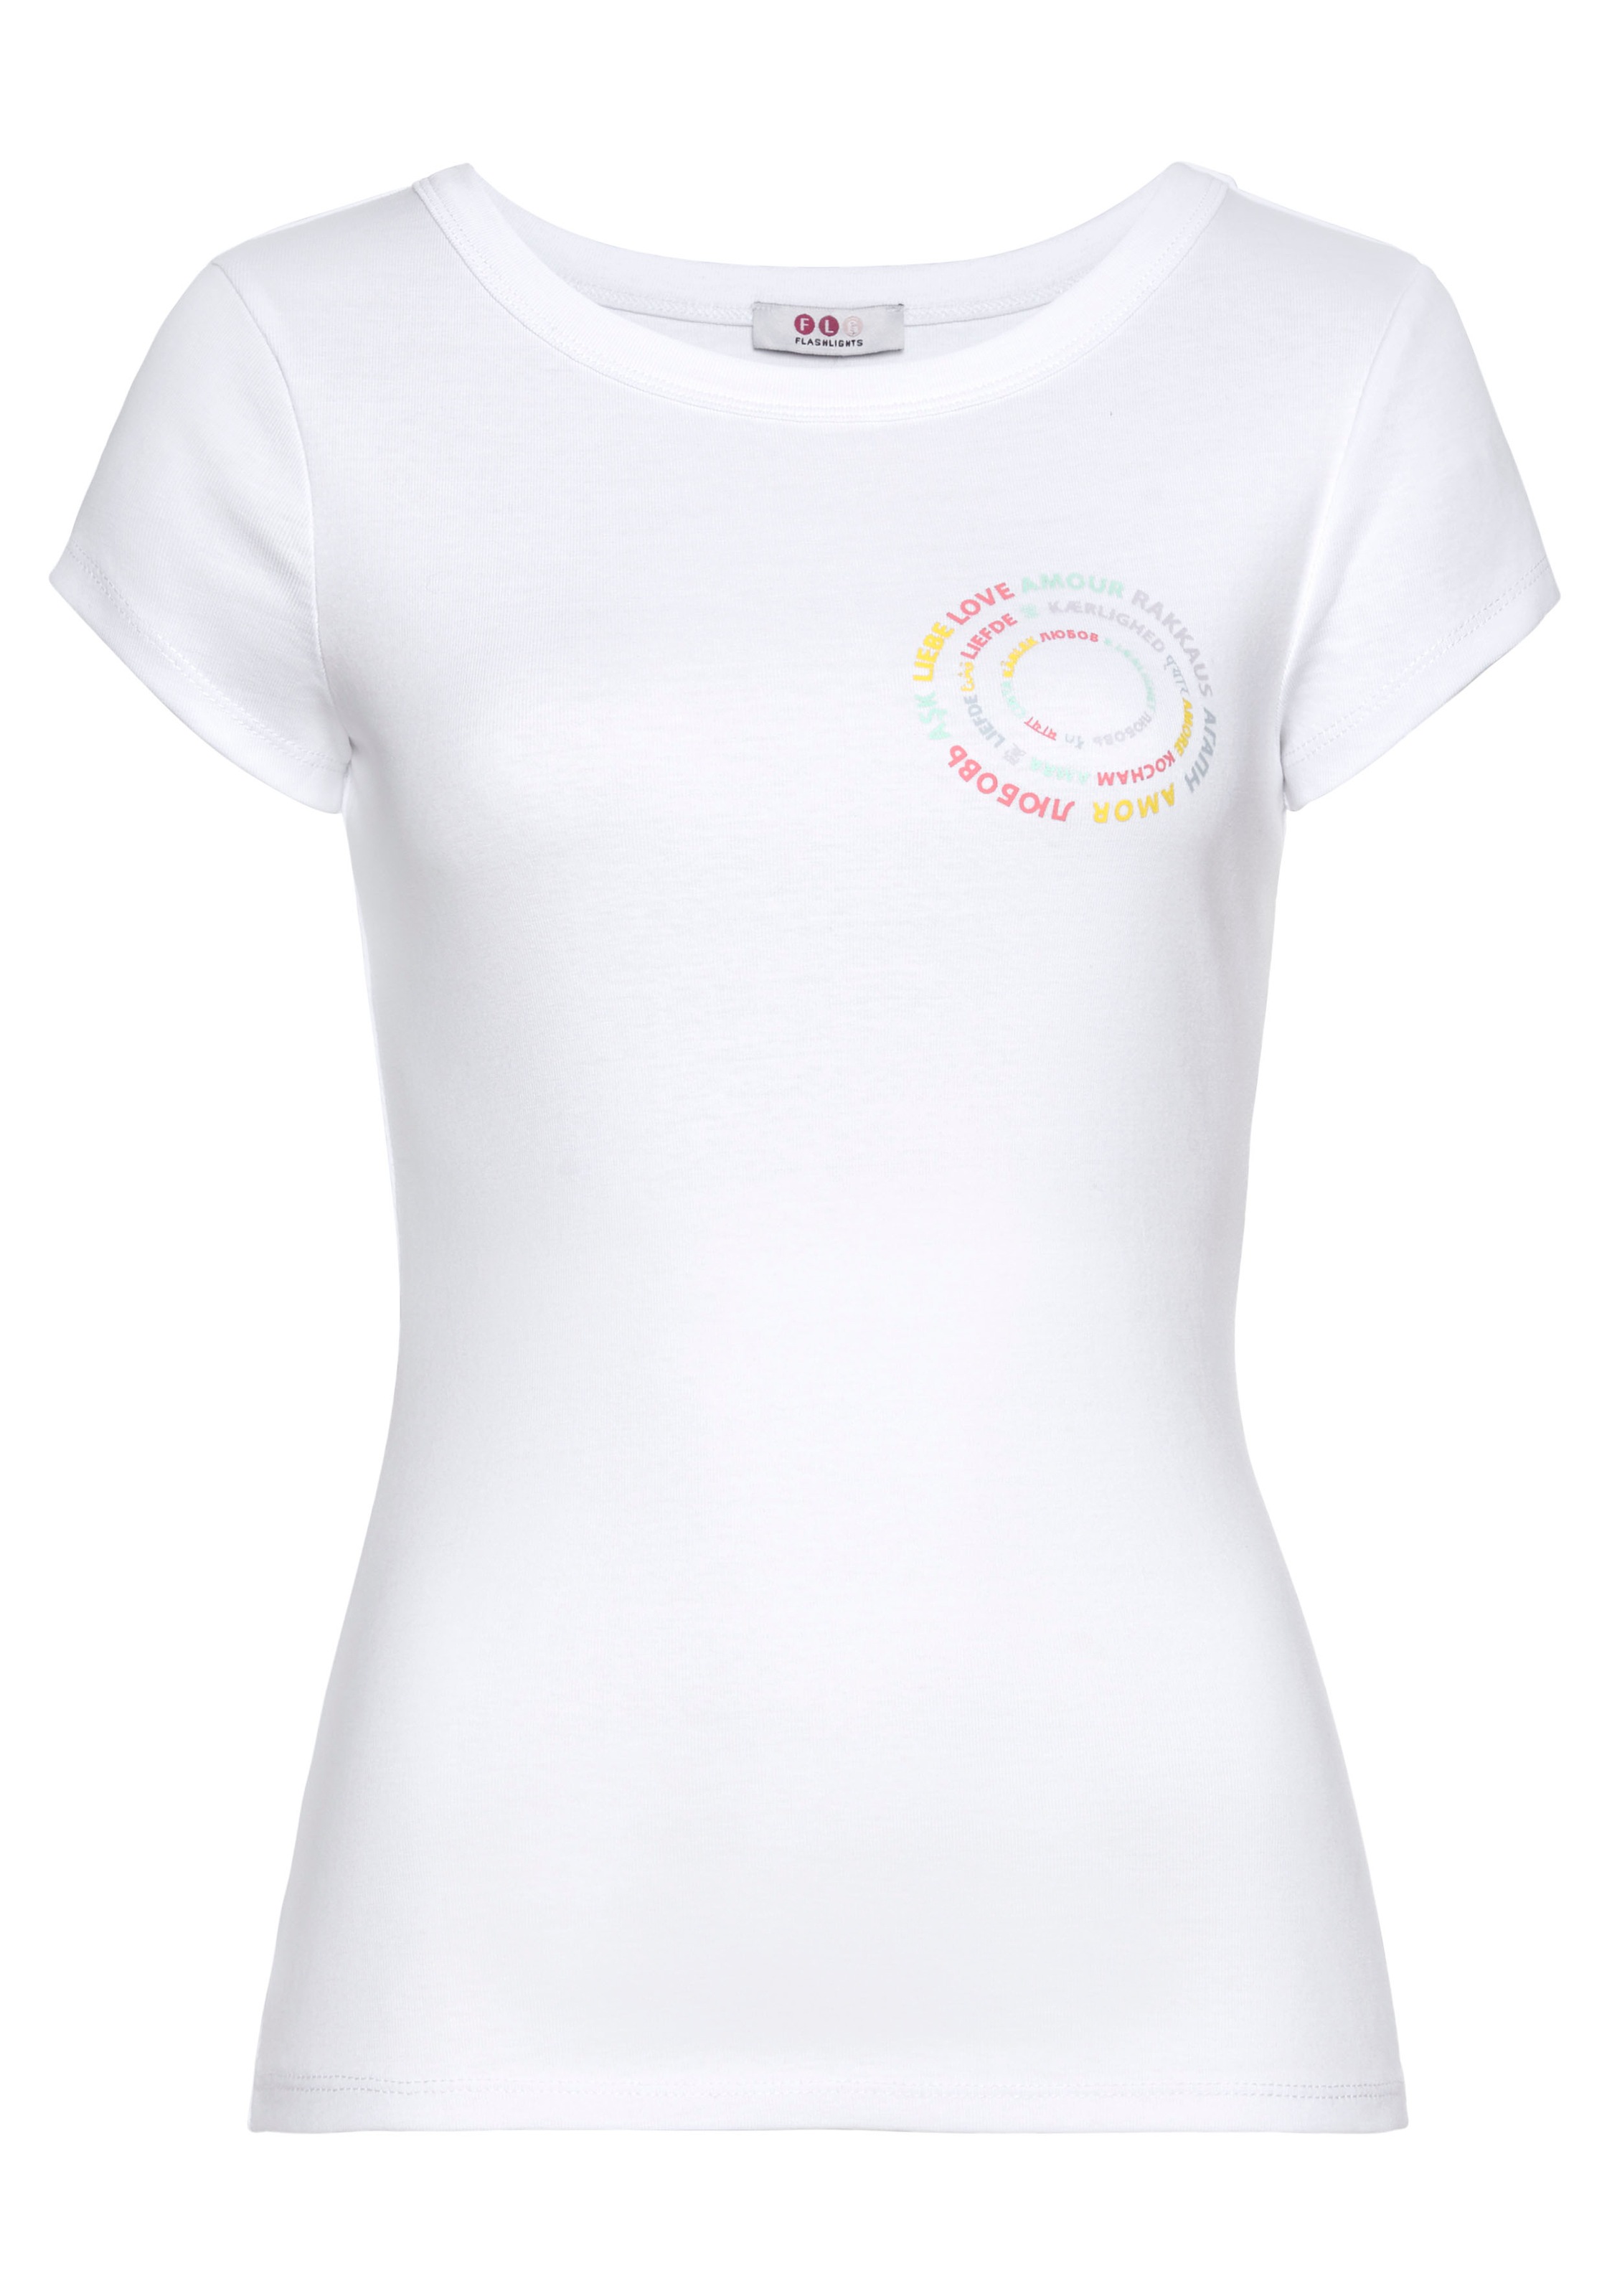 Edition Shop im OTTO Flashlights Online Pride T-Shirt,